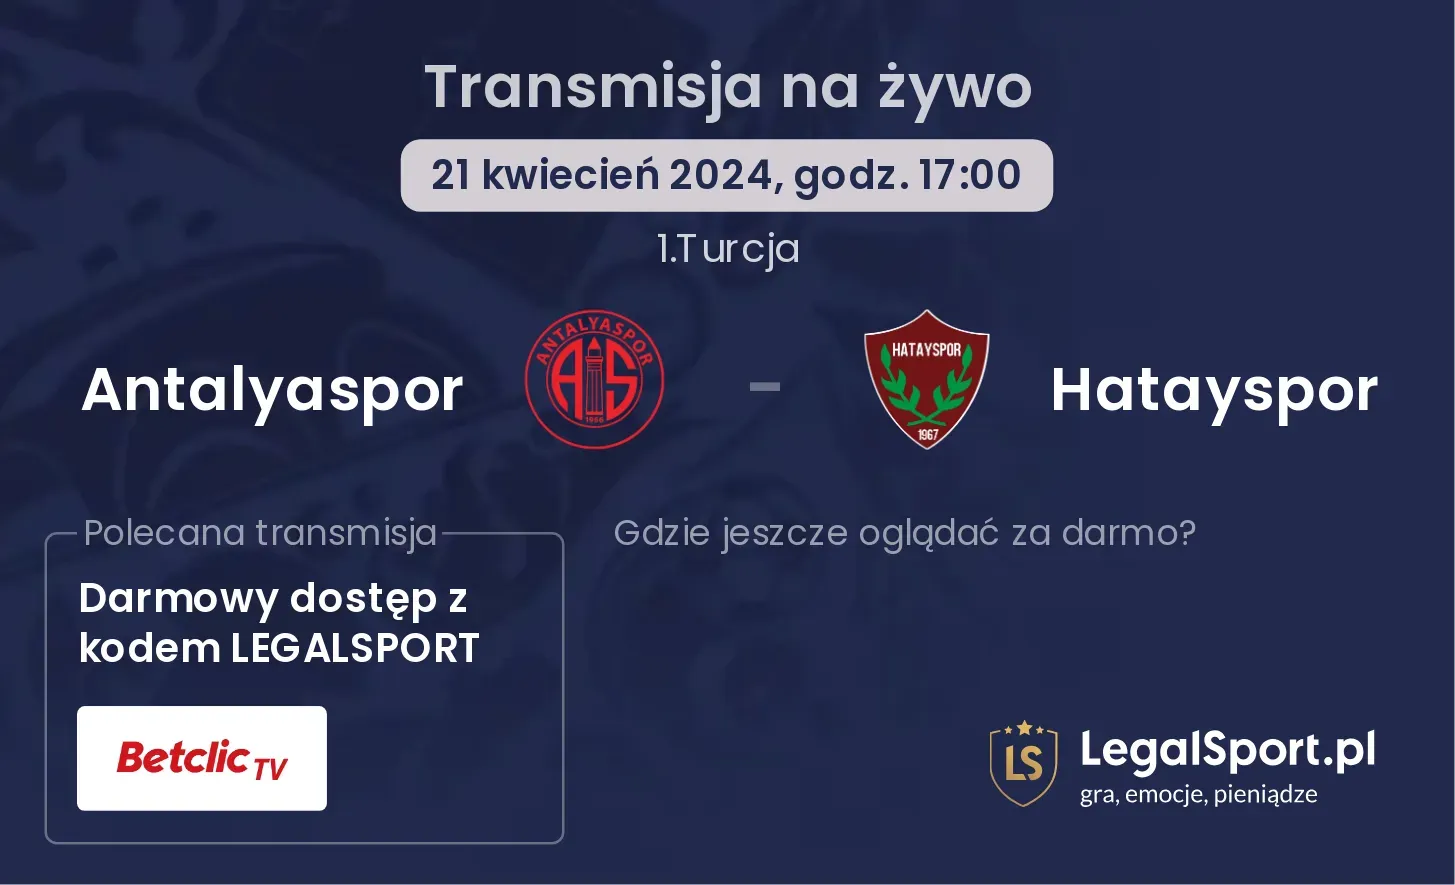 Antalyaspor - Hatayspor transmisja na żywo